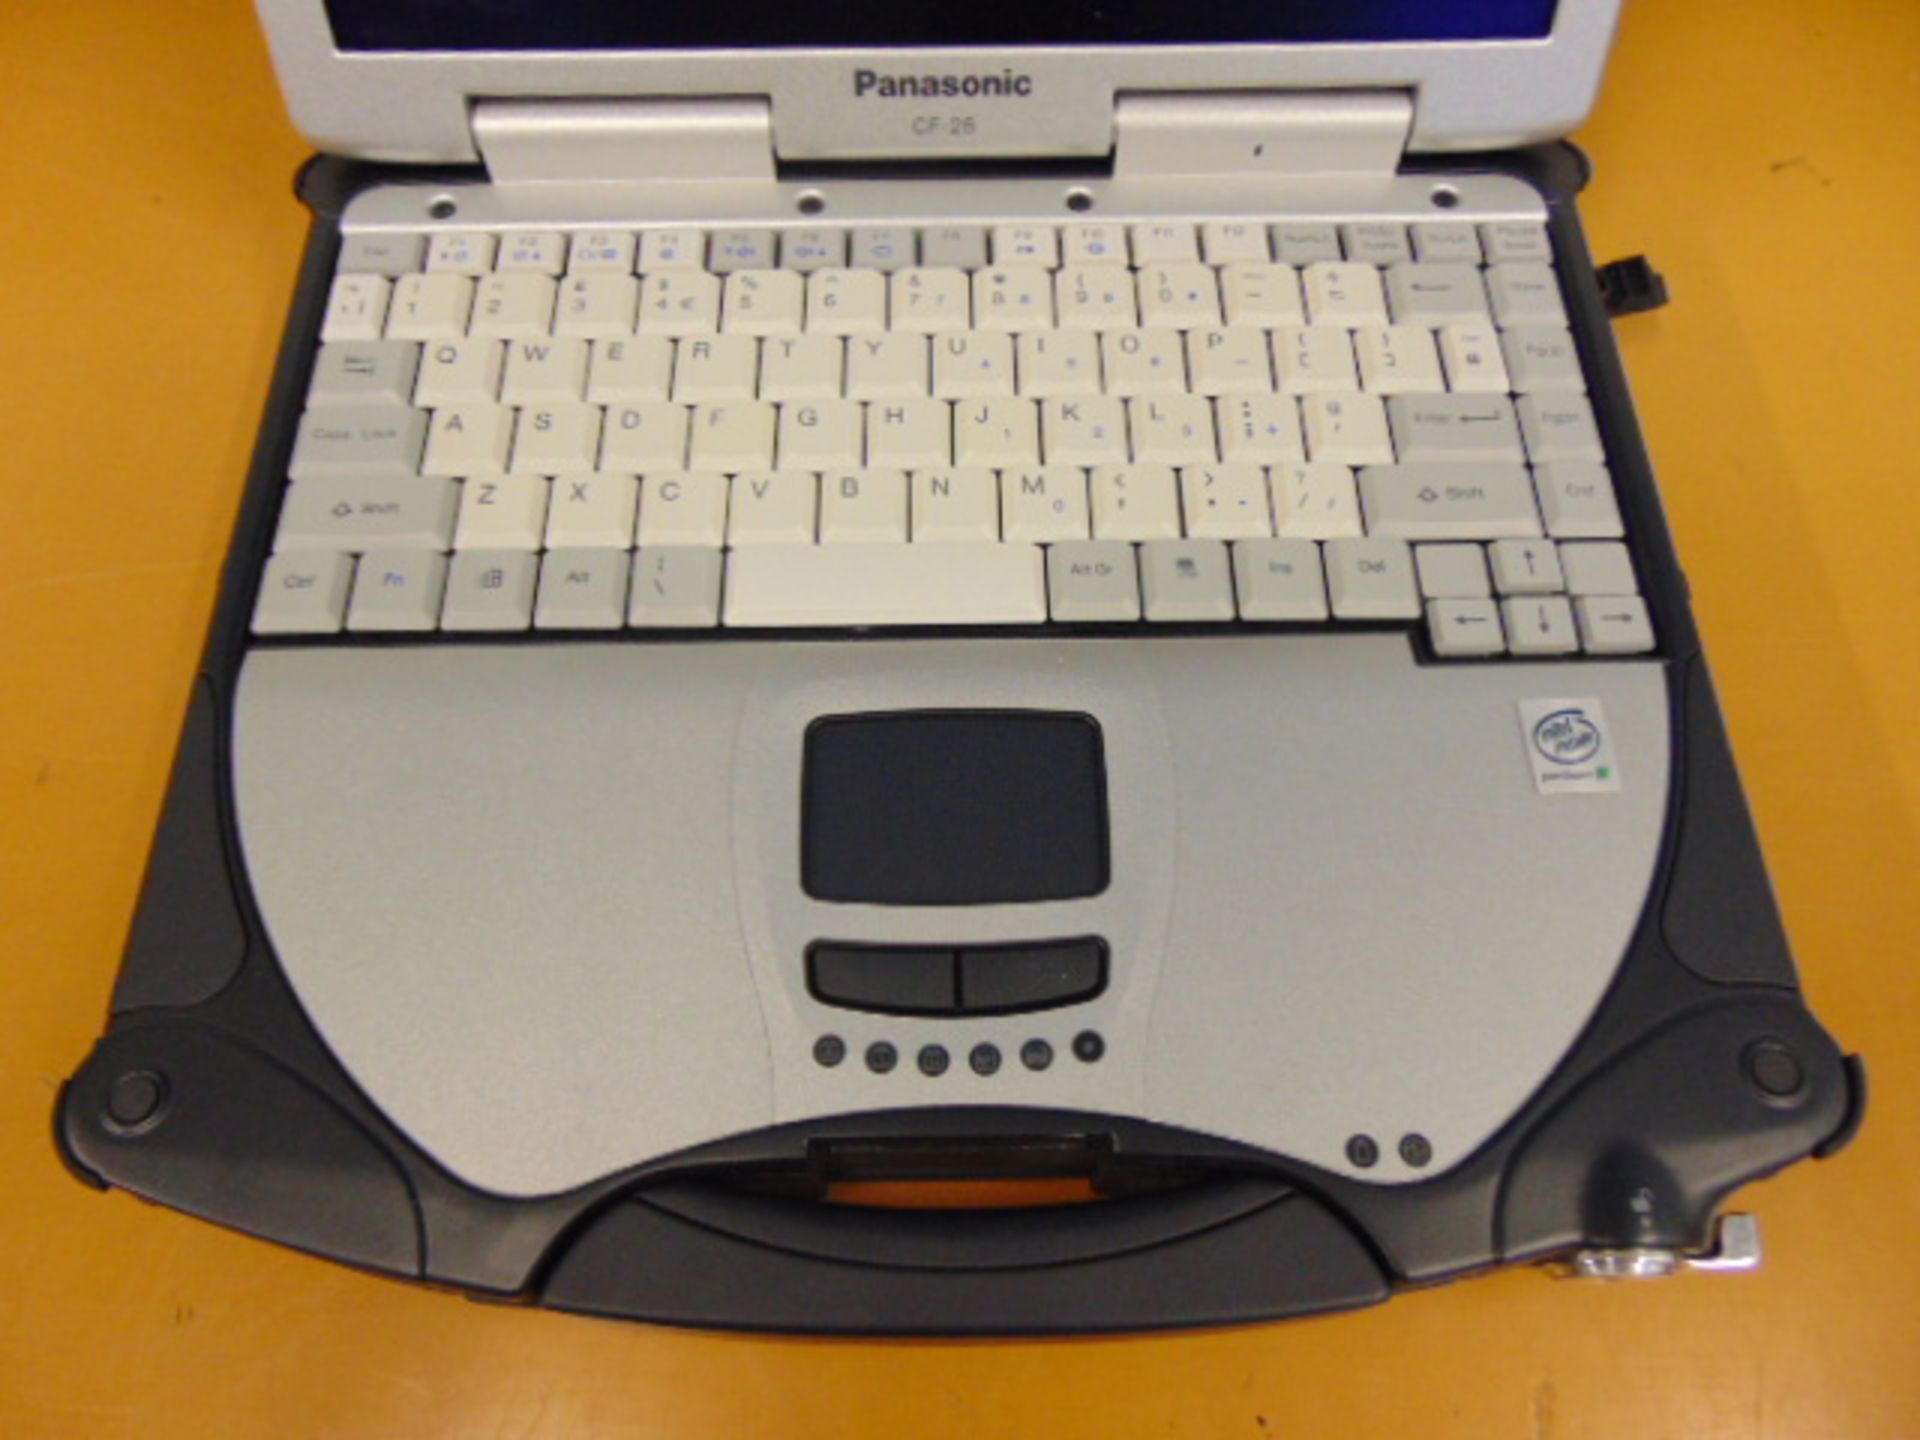 Panasonic CF-28 Toughbook Laptop - Image 3 of 11